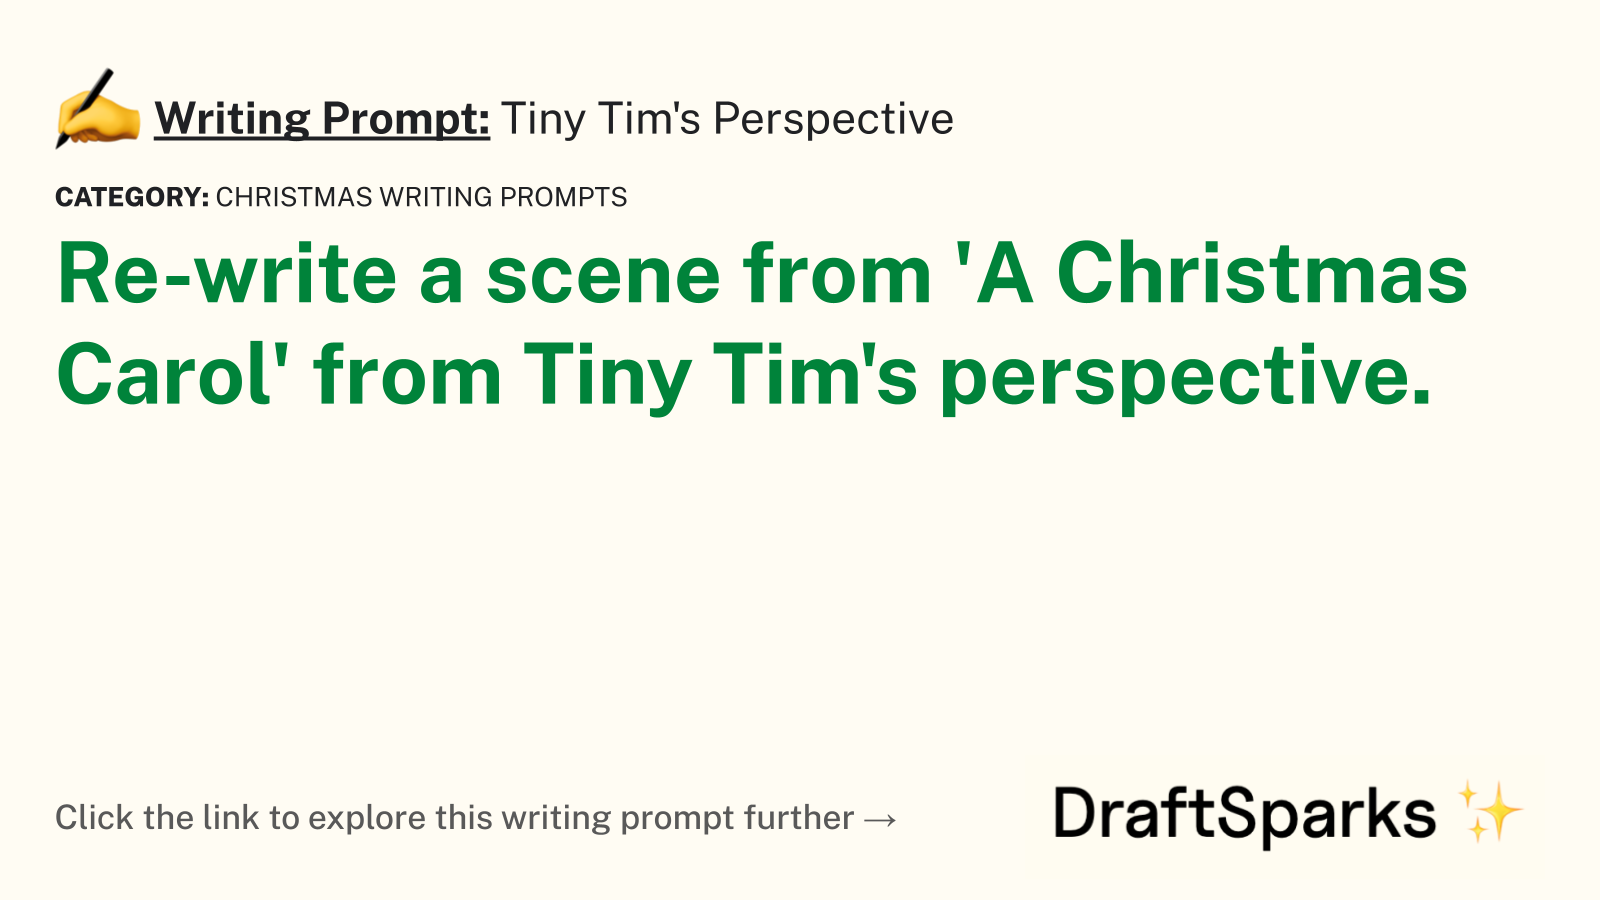 Tiny Tim’s Perspective